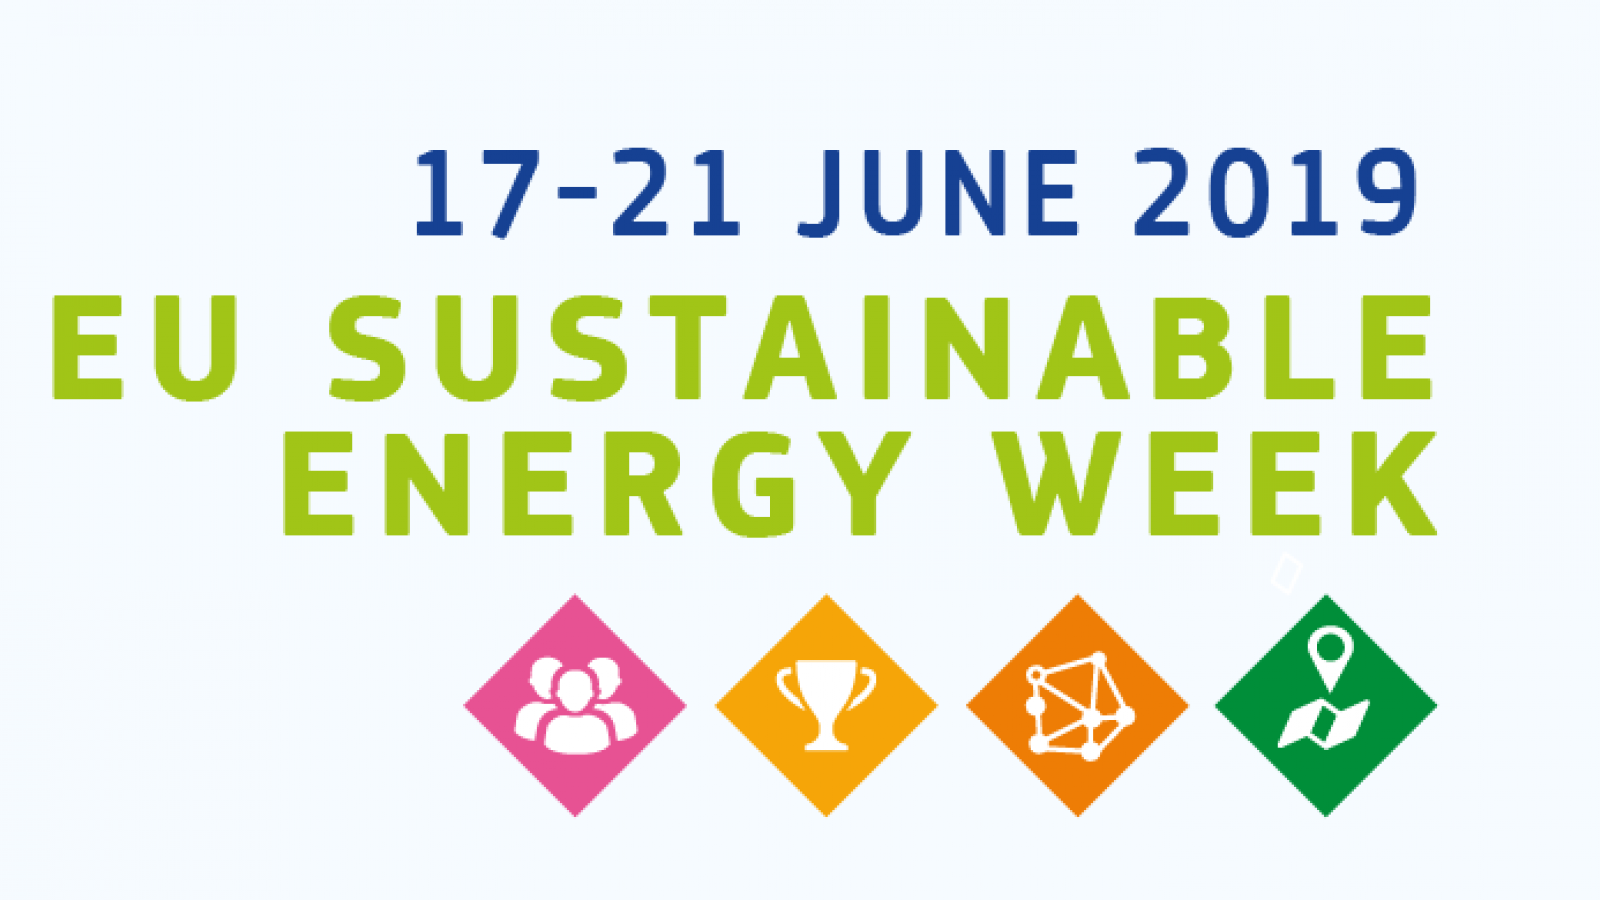 EU Sustainable Energy Week 2019 dates announced